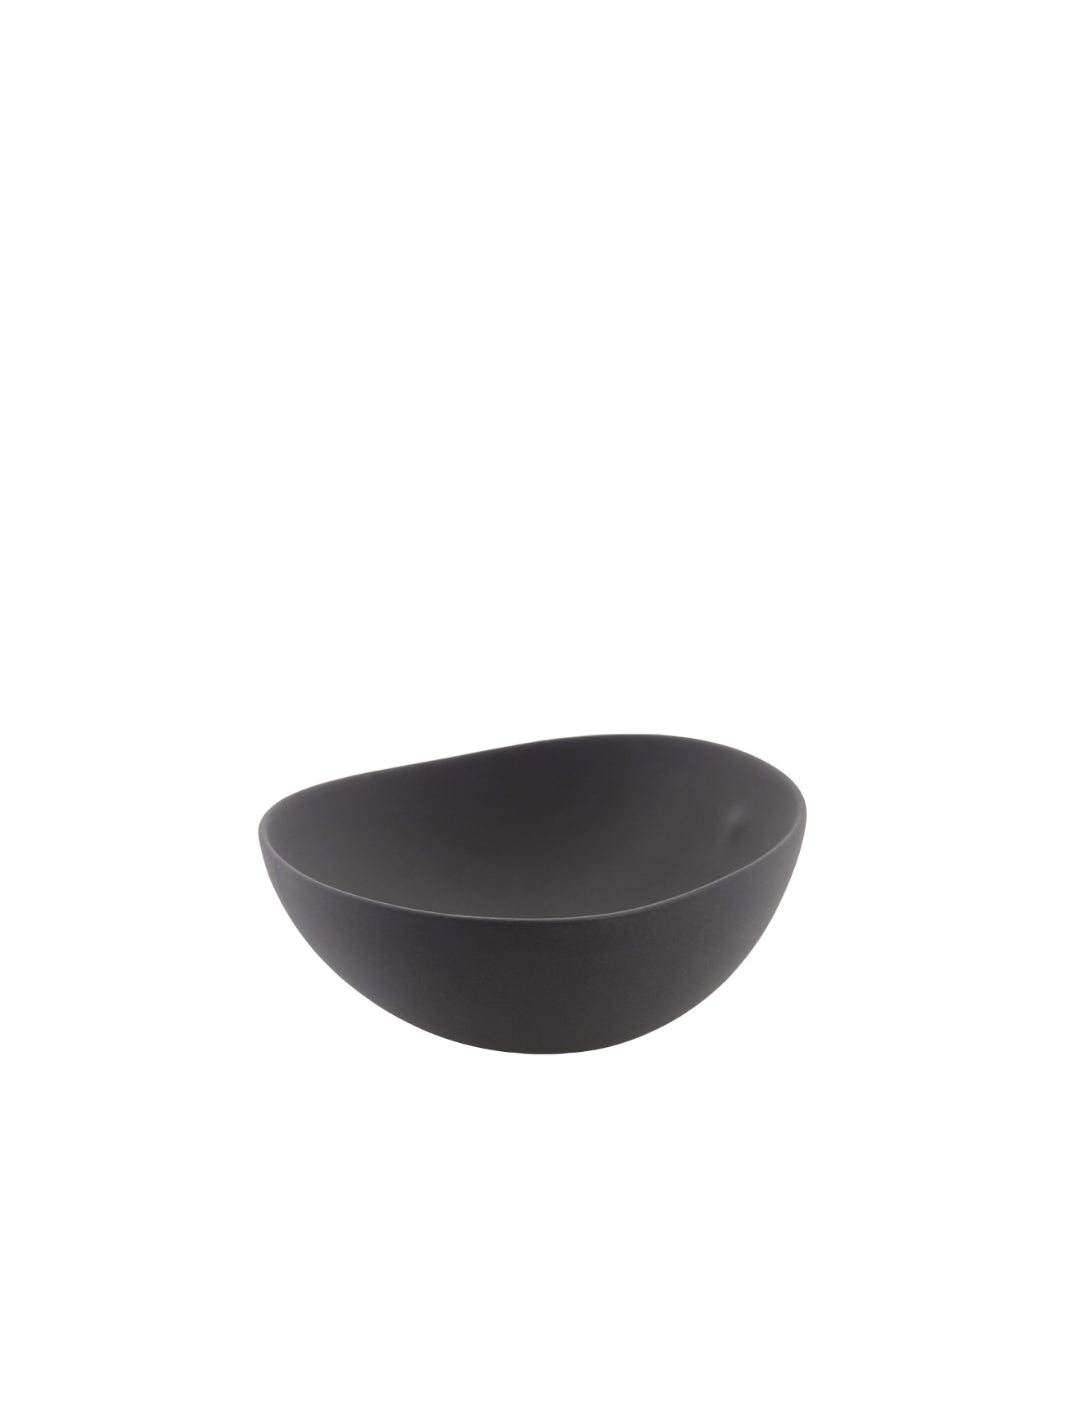 COOKPLAY Shell Ramen Bowl (19.5x18.5cm/7.7x7.3in)